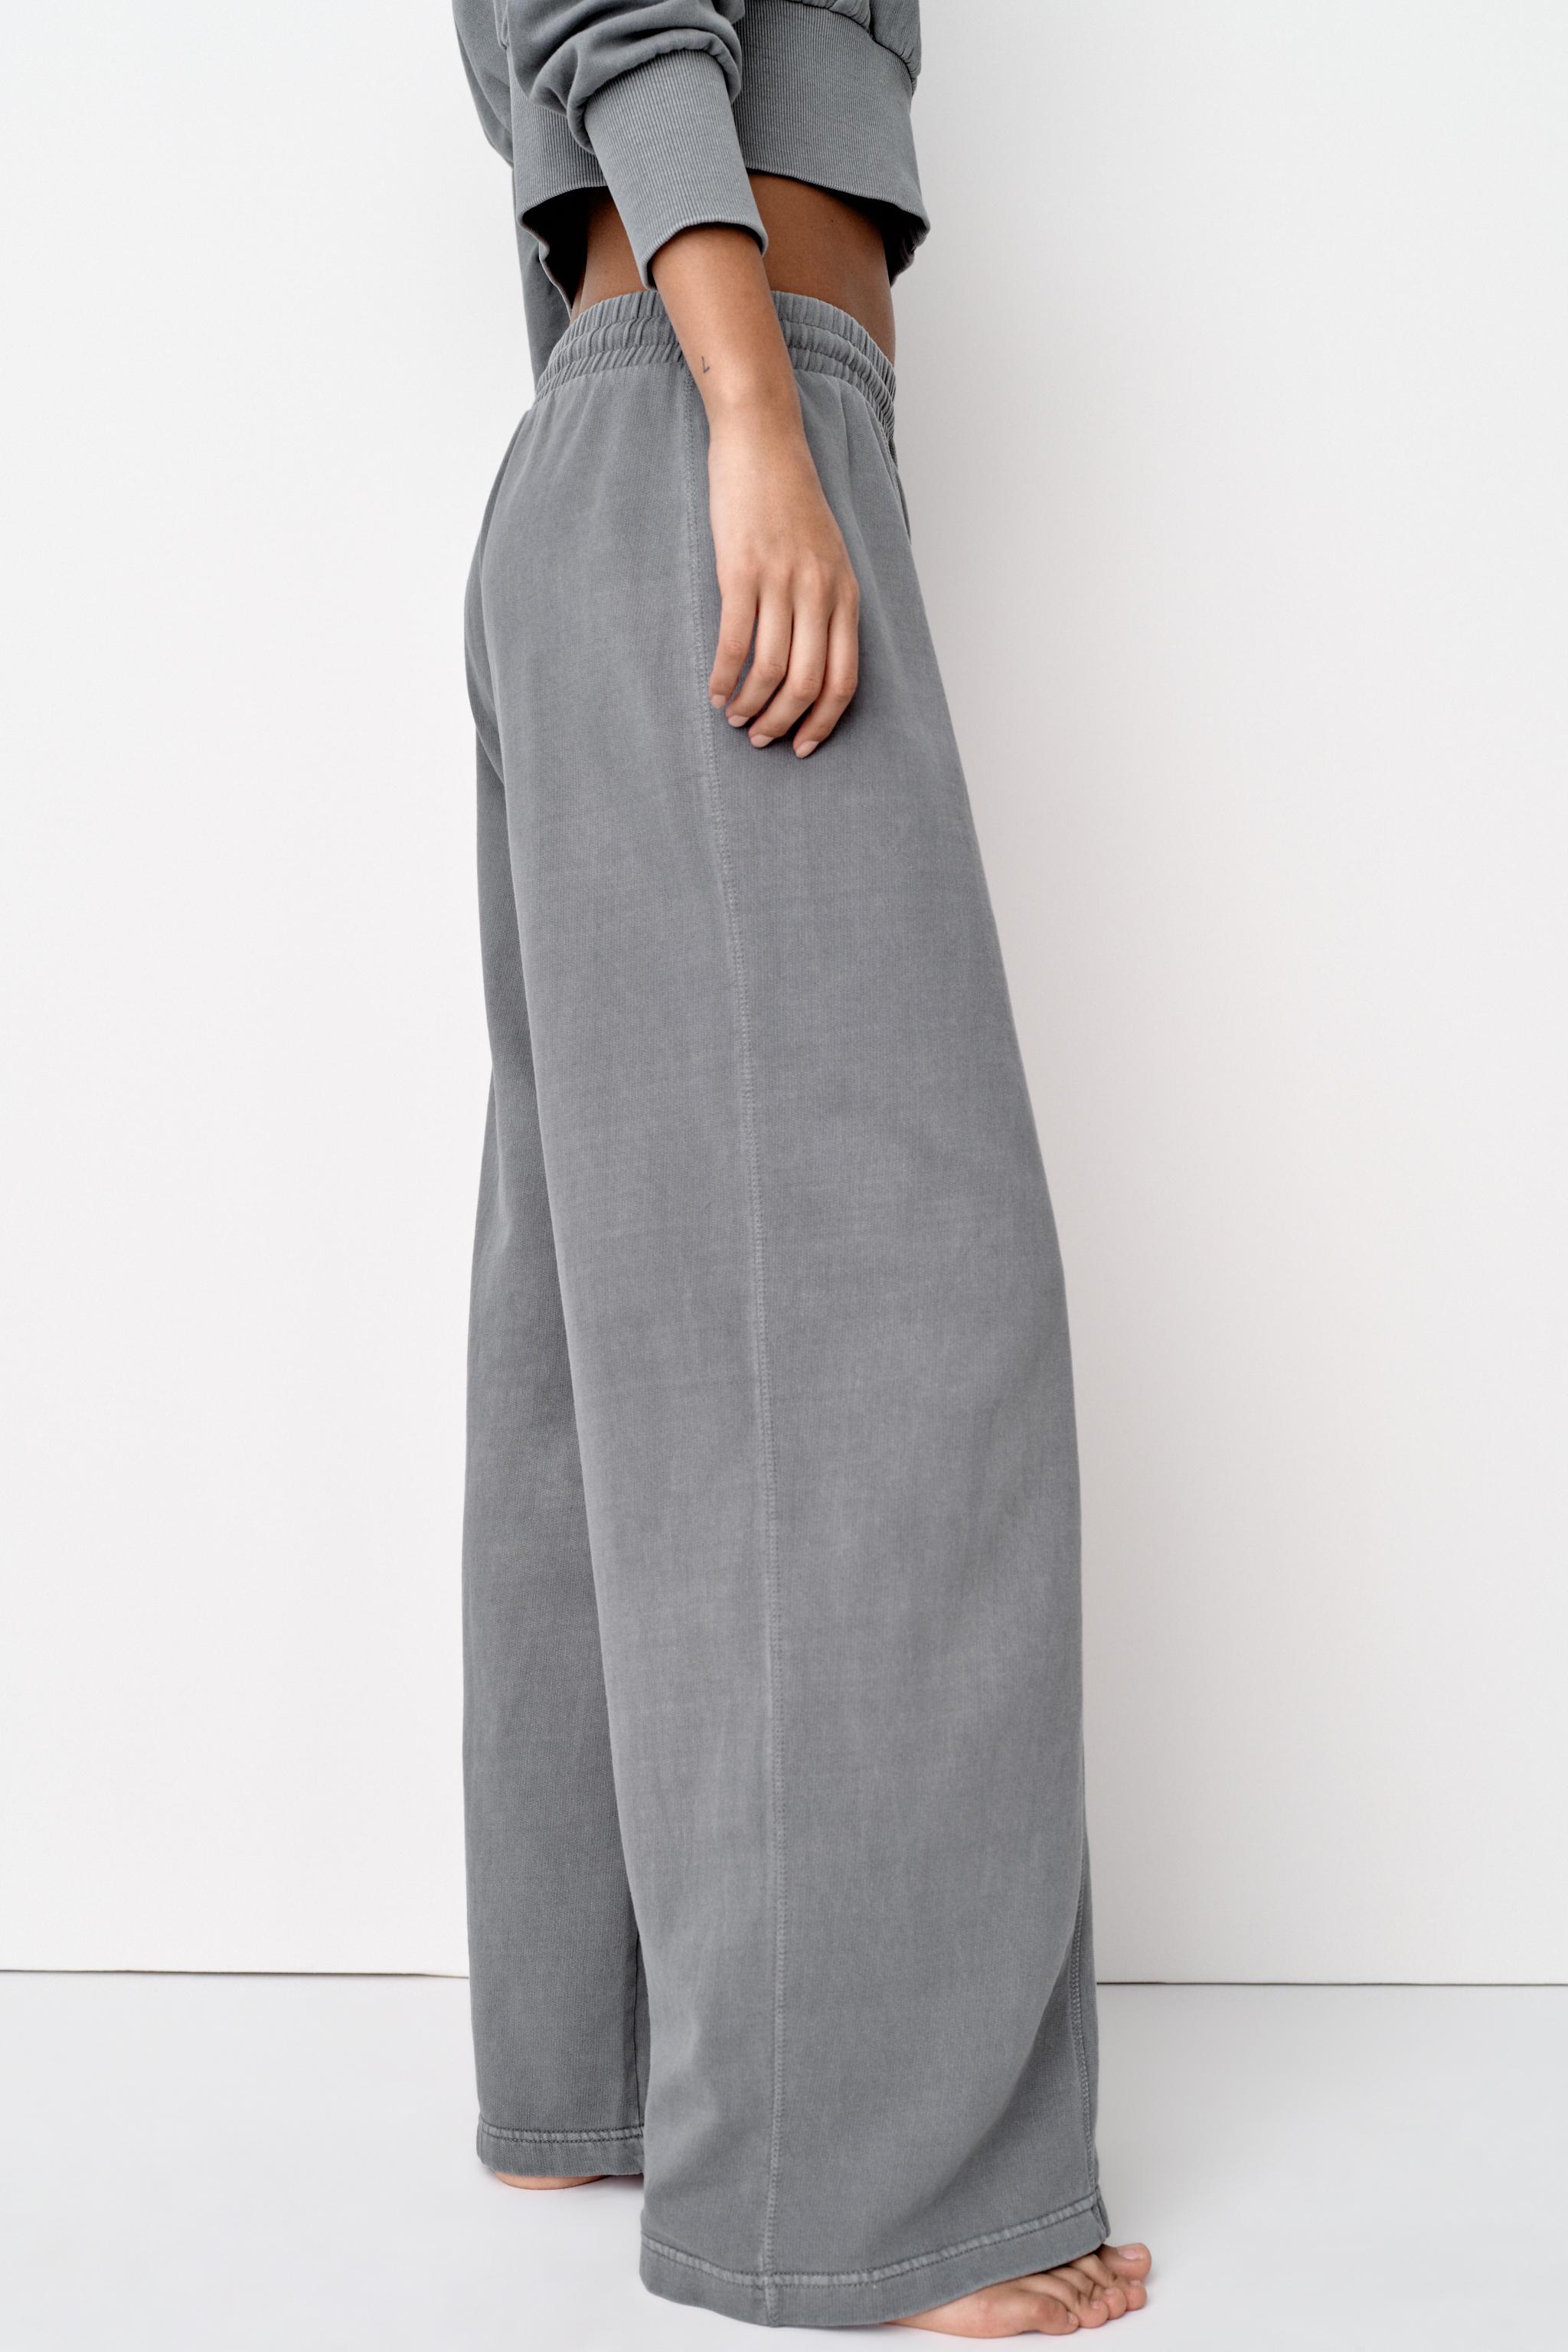 Zara casual pants high waisted fold up hem pleated elastic waist